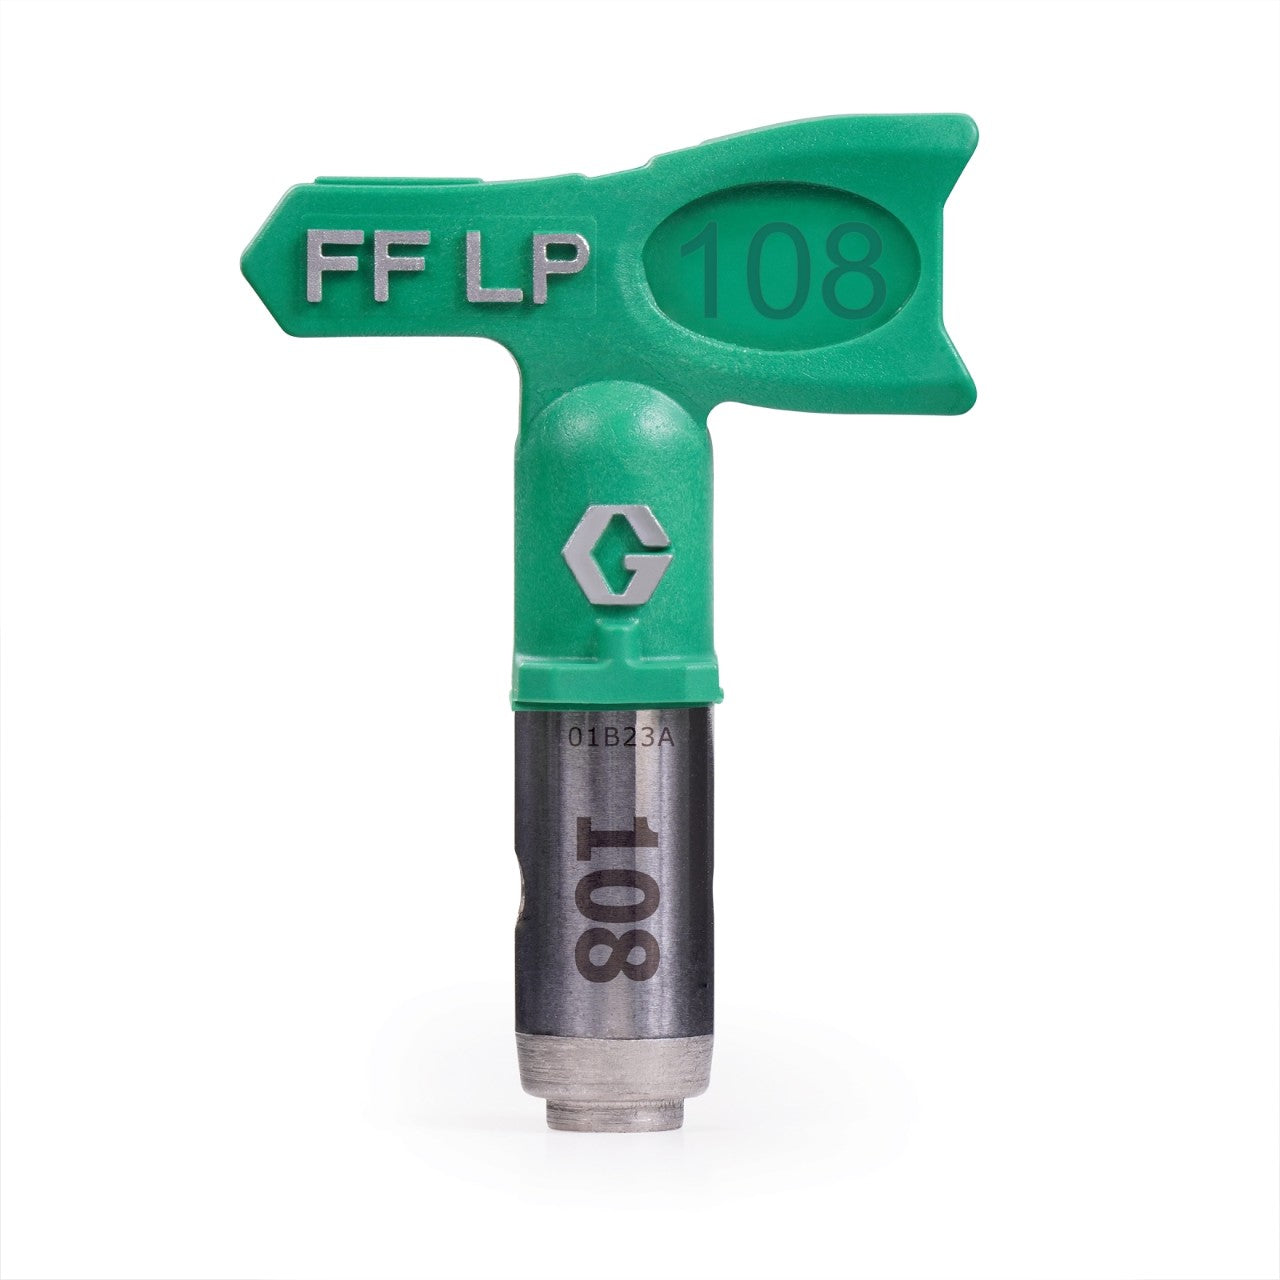 Graco FFLP-108 Tip